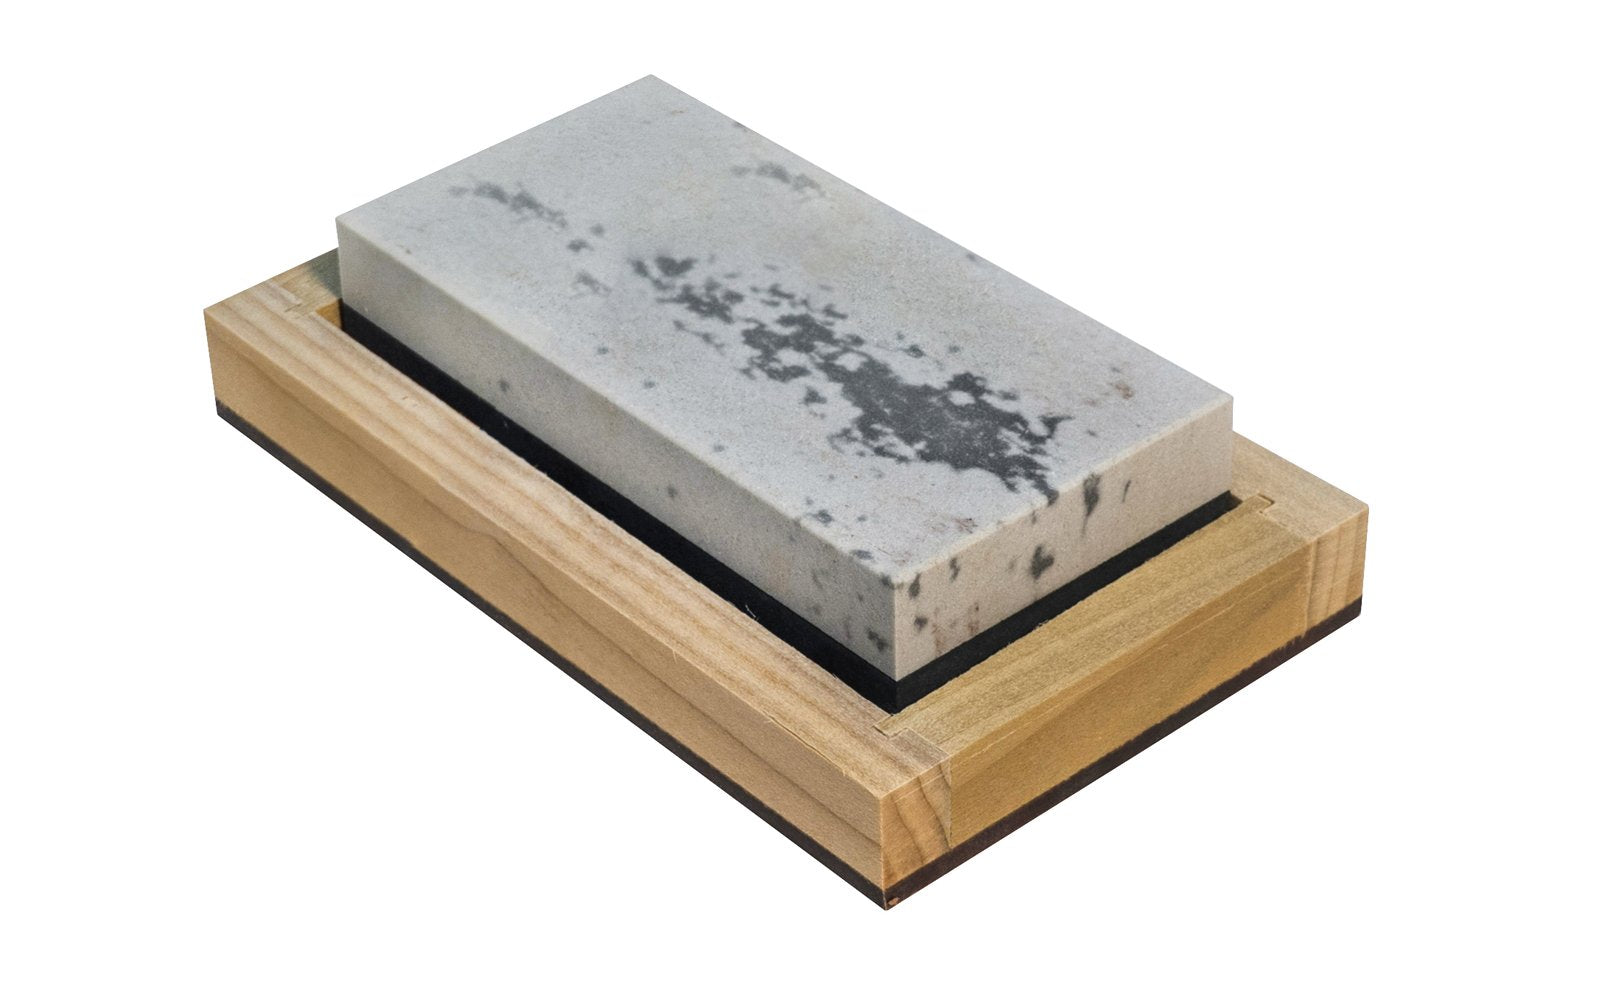  Genuine Arkansas Combination Soft (Medium) and Hard (Fine)  Knife Sharpening Bench Stone Whetstone 8 x 2 x 1 in Wood Box MFC-8-C:  Home & Kitchen